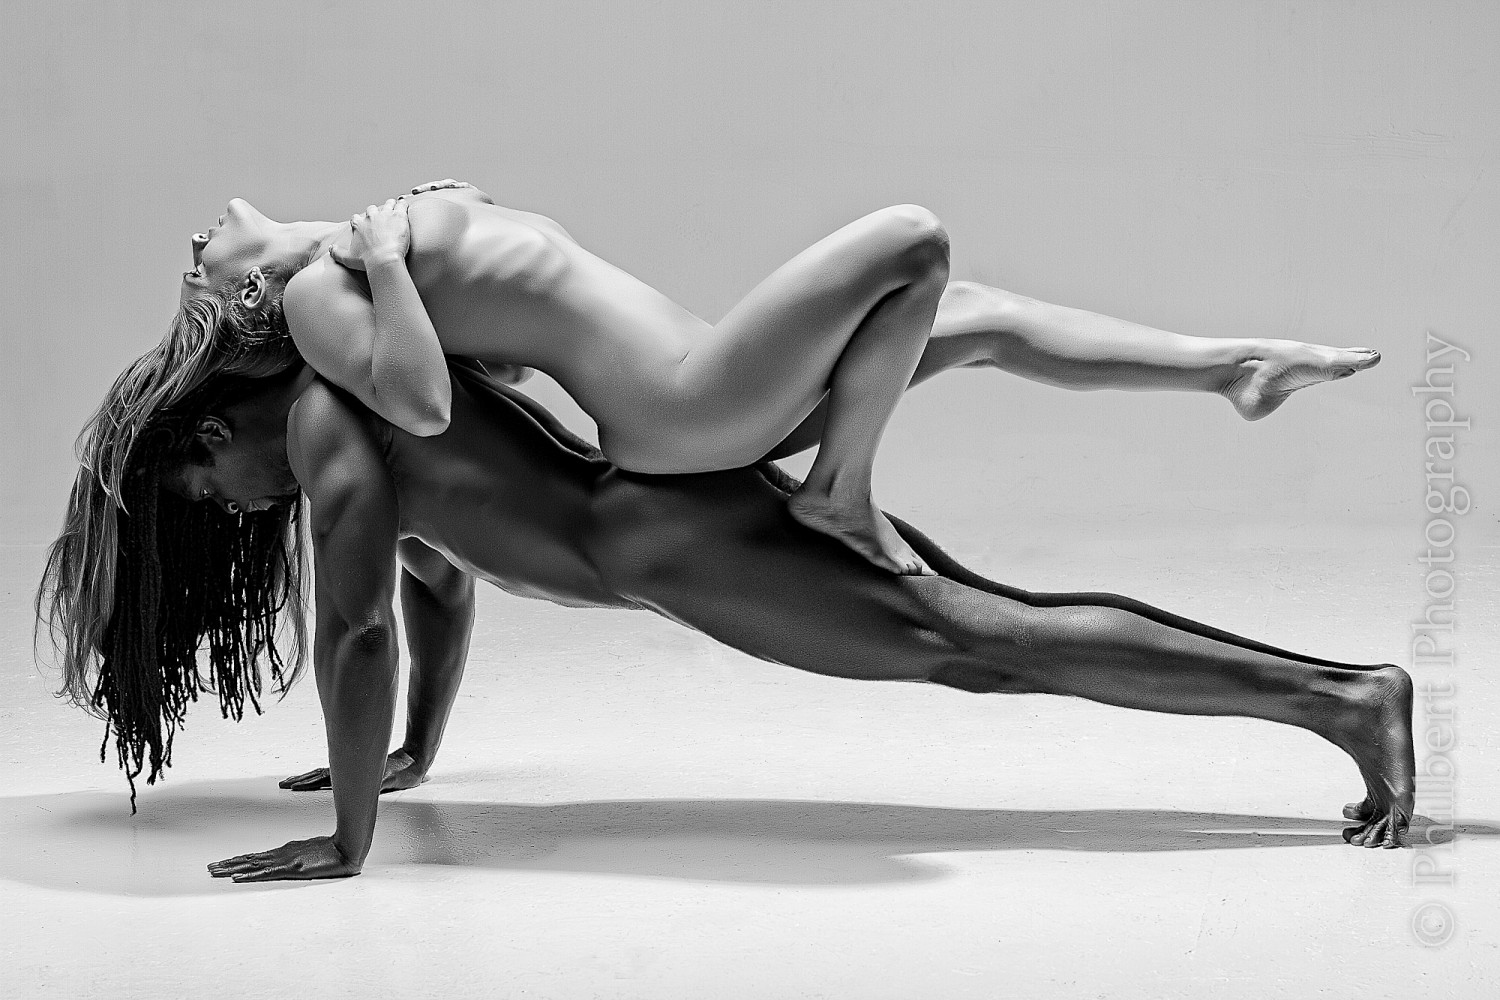 40+ Fine Art Nude Photos that Celebrate All Body Types (NSFW). 